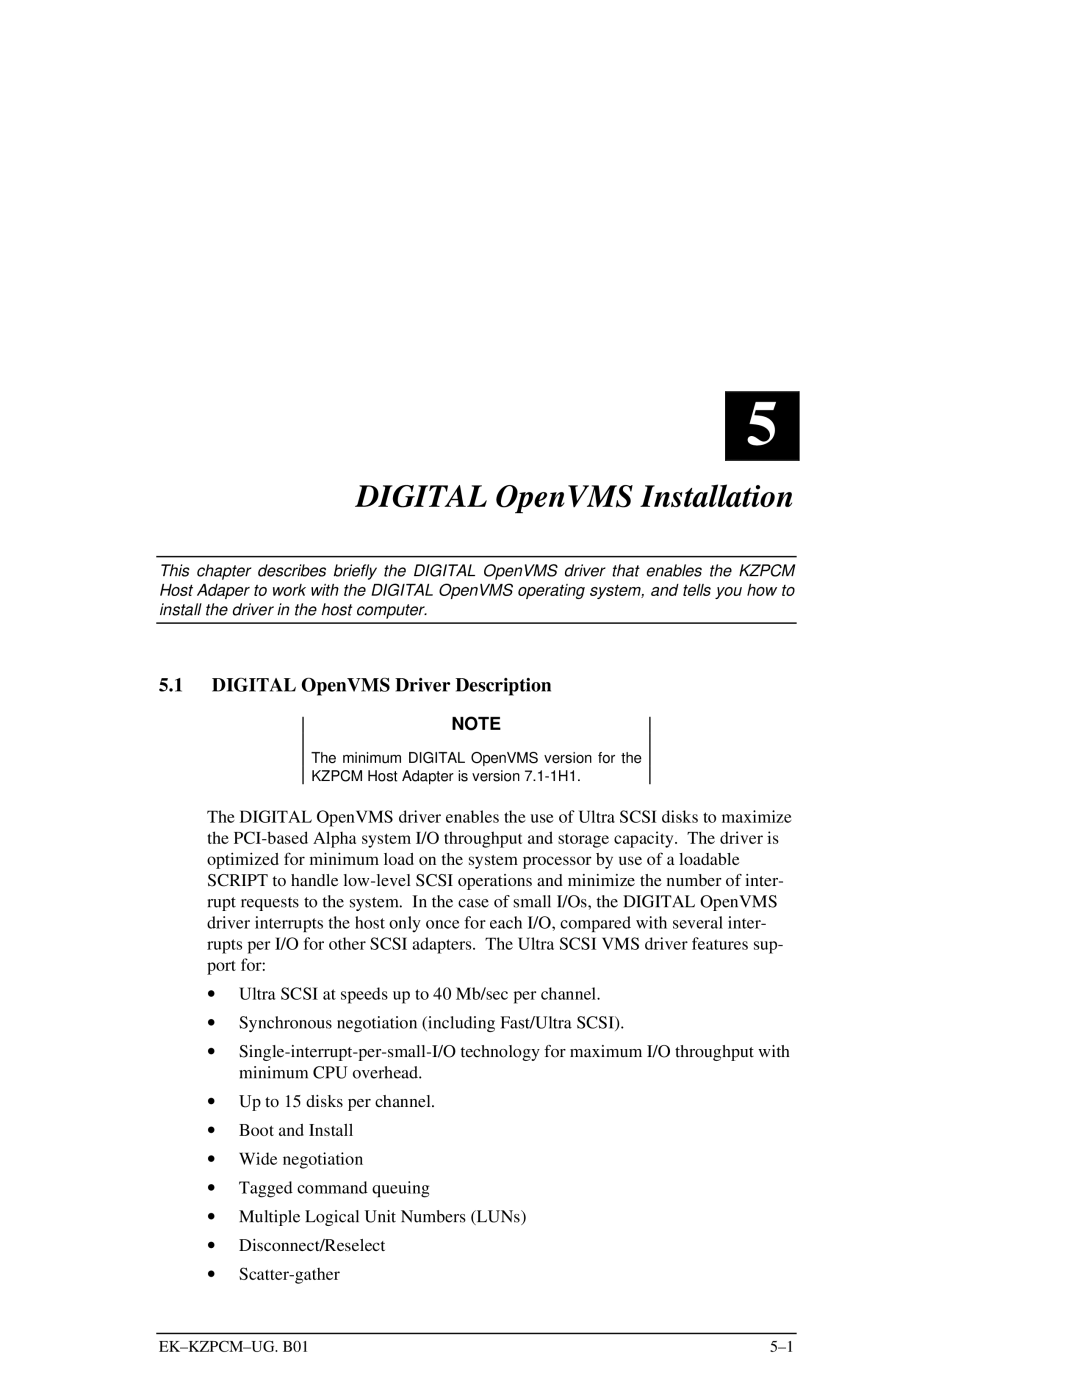 Intel EK-KZPCM-UG manual DIGITAL OpenVMS Installation, DIGITAL OpenVMS Driver Description 